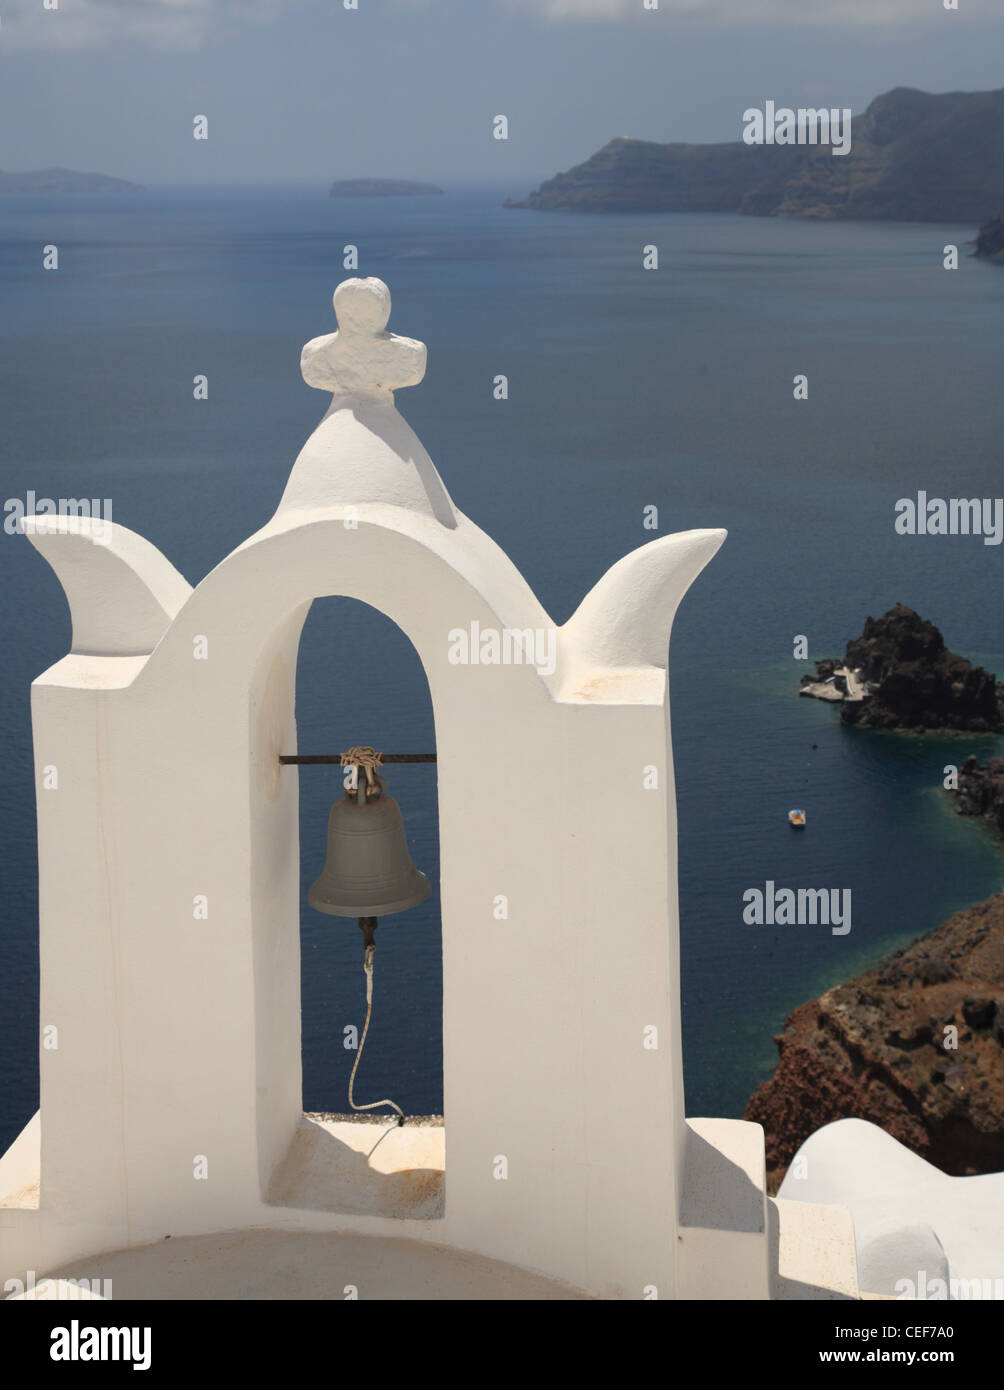 Byzantine Greek Orthodox church bell tower, Oia, Santorini, Cyclades Islands, Greece Stock Photo